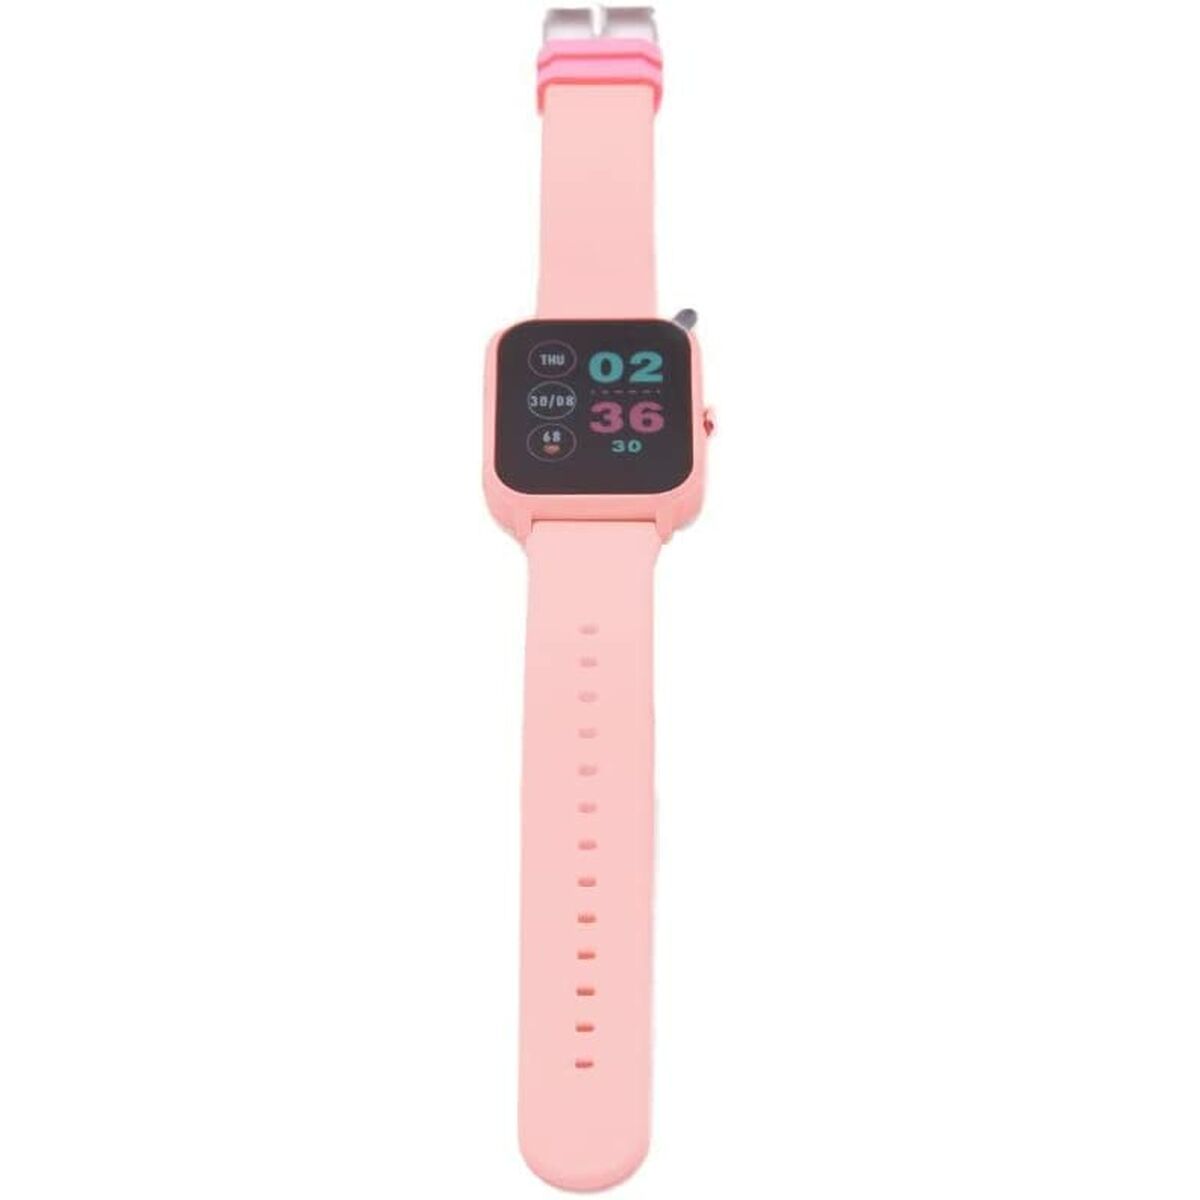 Kids' Smartwatch Cool Junior 1,44" Pink (1 Unit)